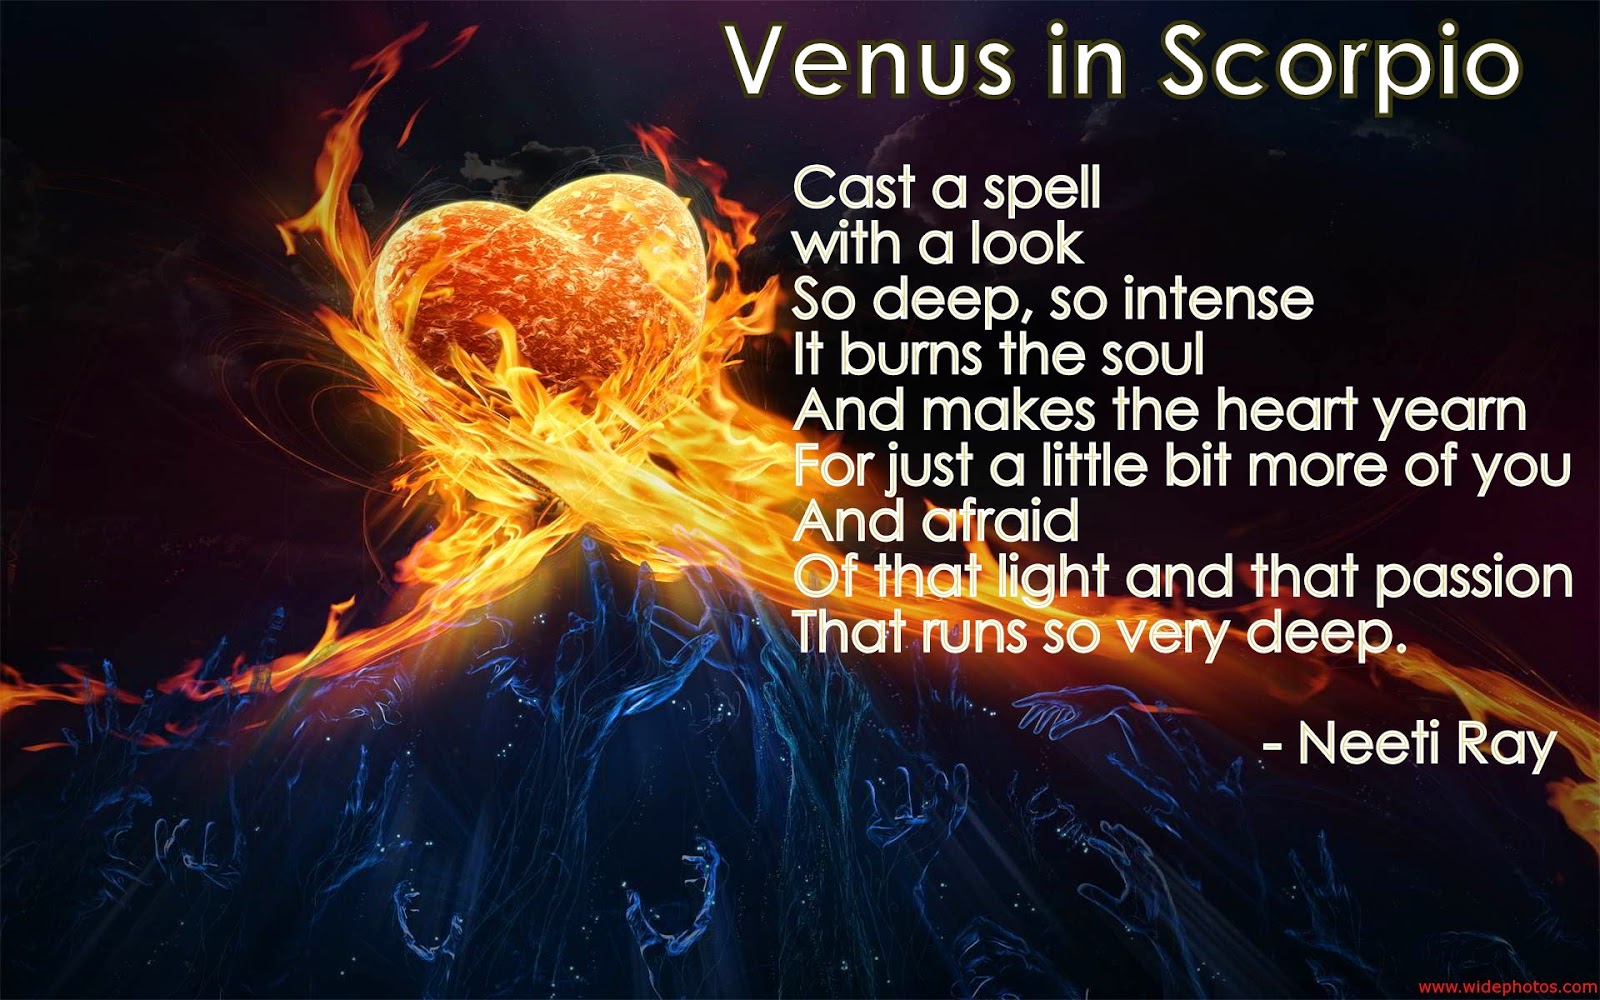 Co je Scorpio na Venuši?